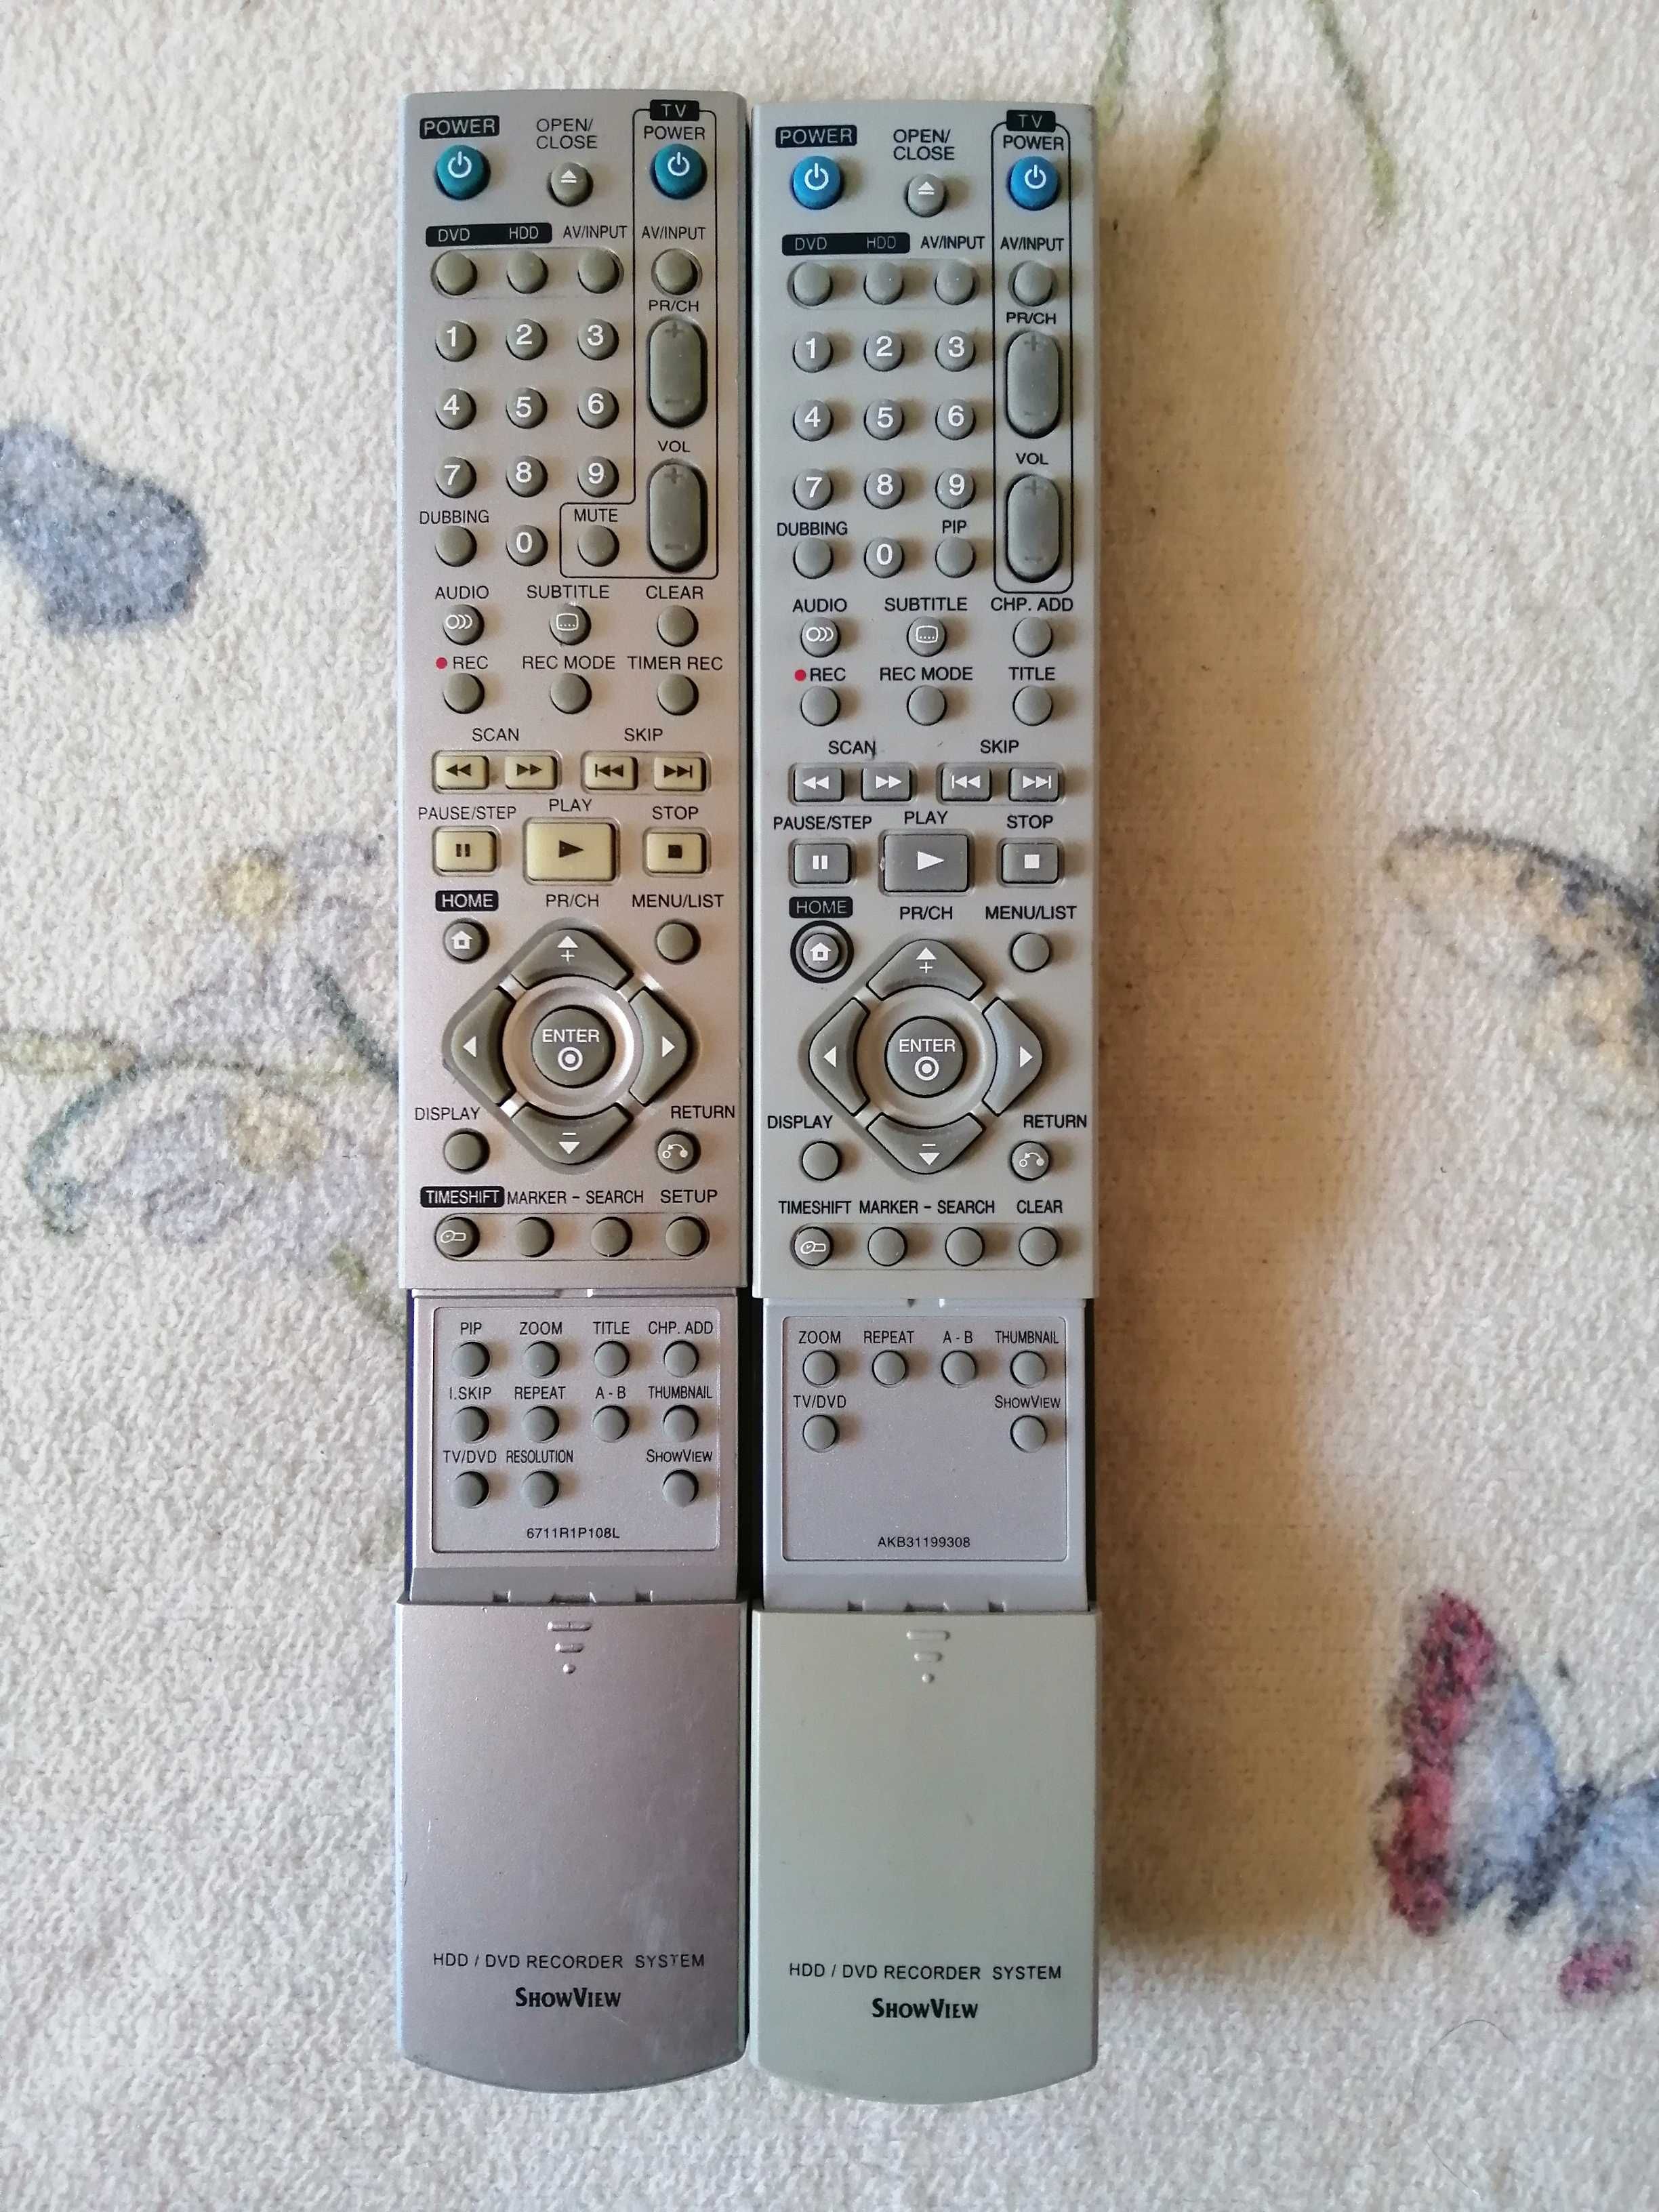 Vand telecomenzi originale compatibile cu aparate LG.